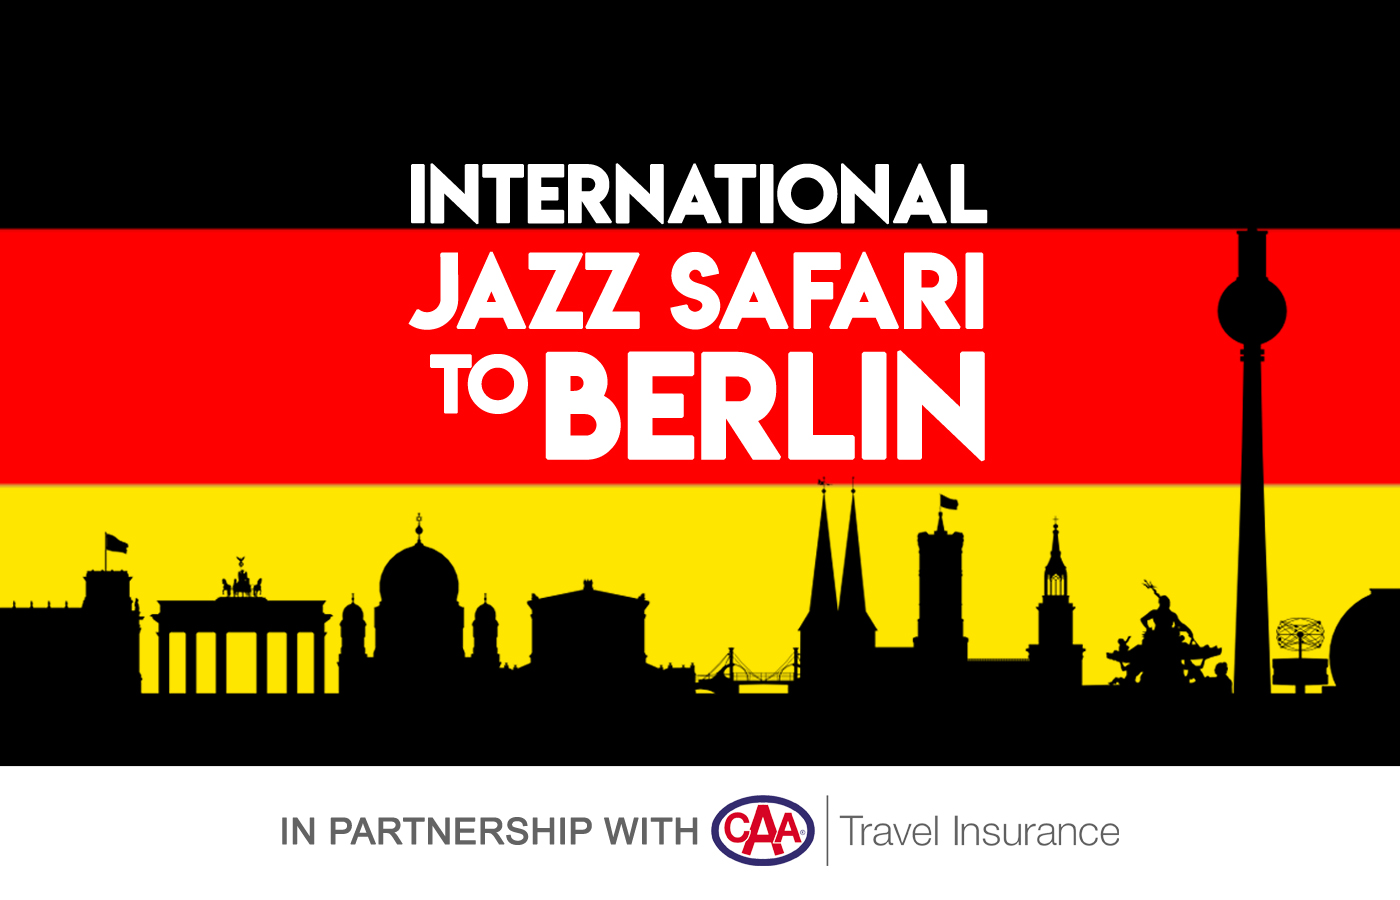 JAZZ.FM91 & CAA International Jazz Safari to Berlin